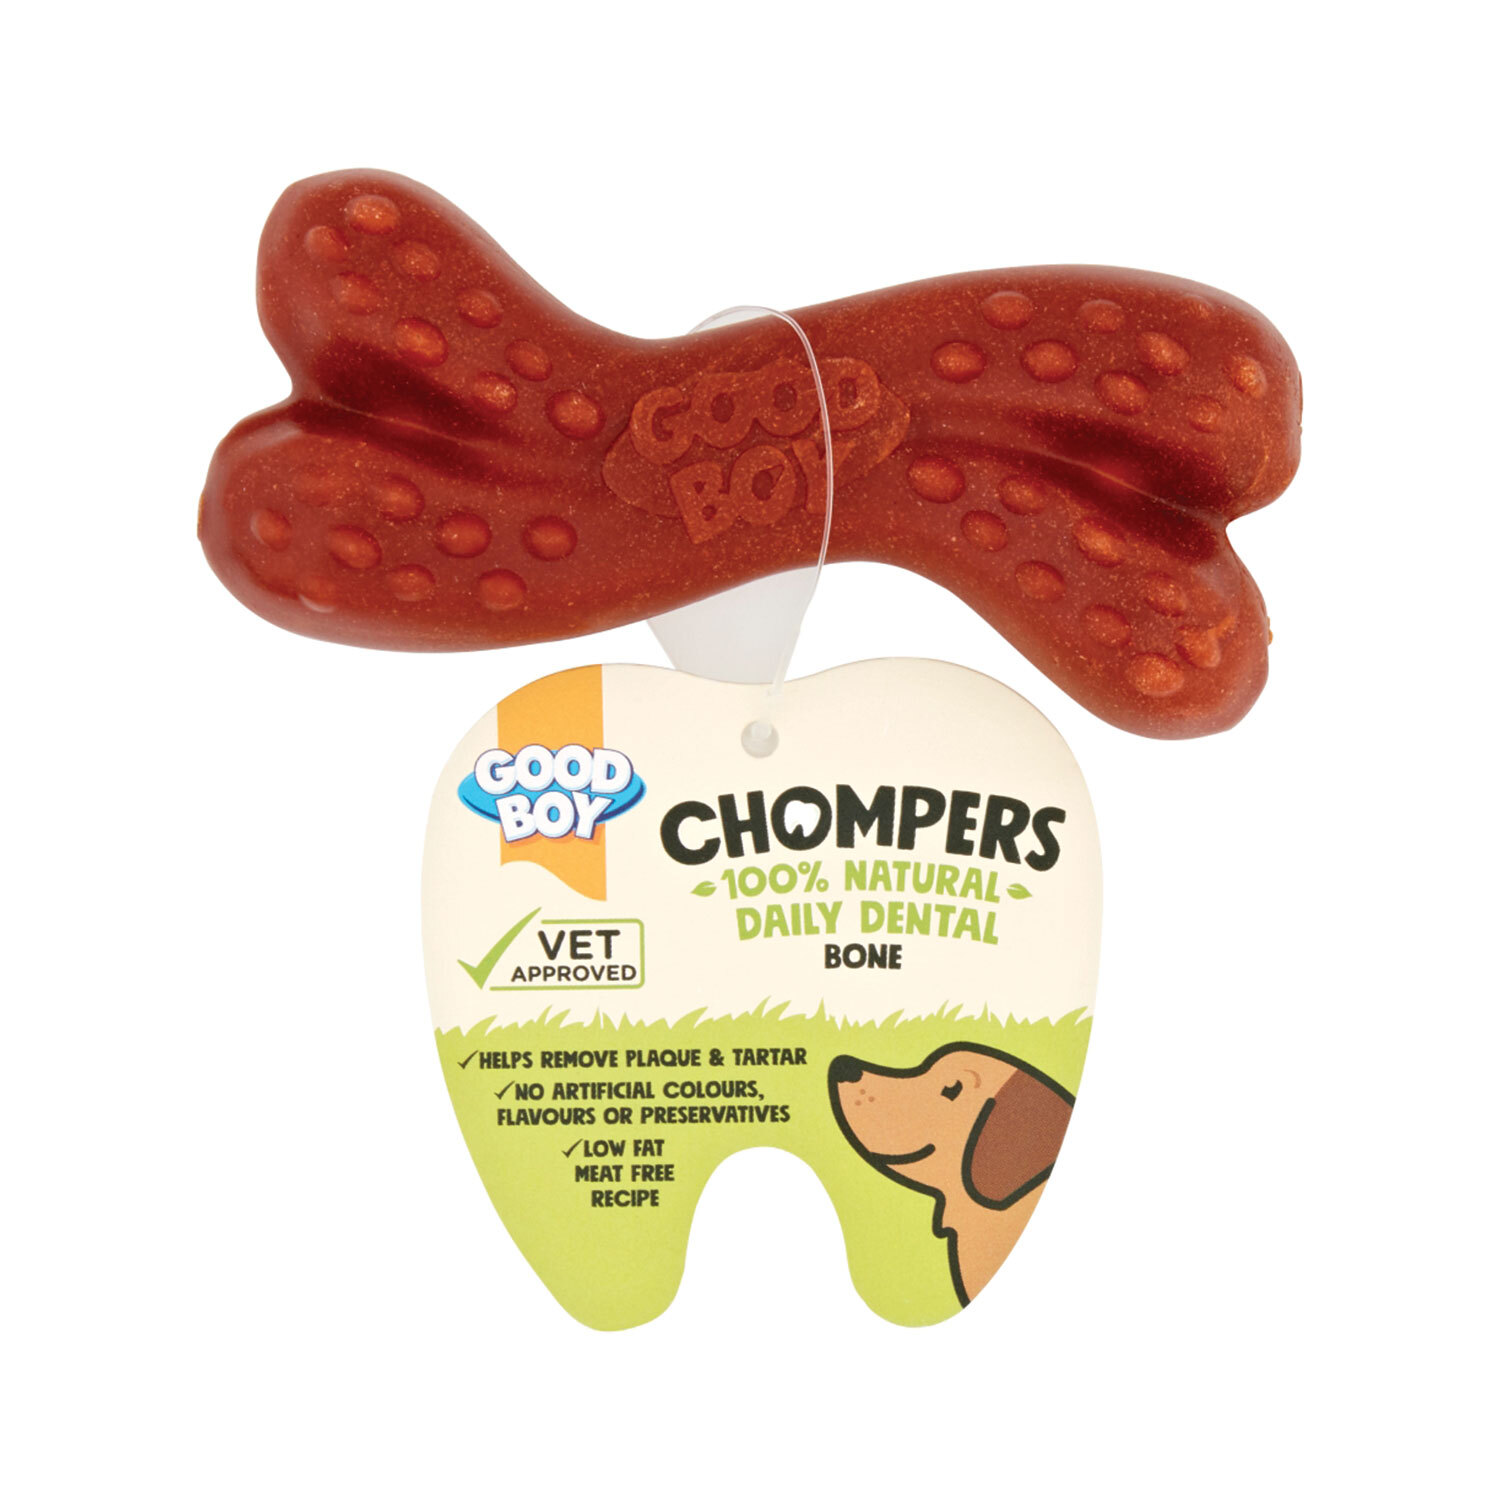 Good Boy Chompers Dental Bone Dog Treat 60g Image 2